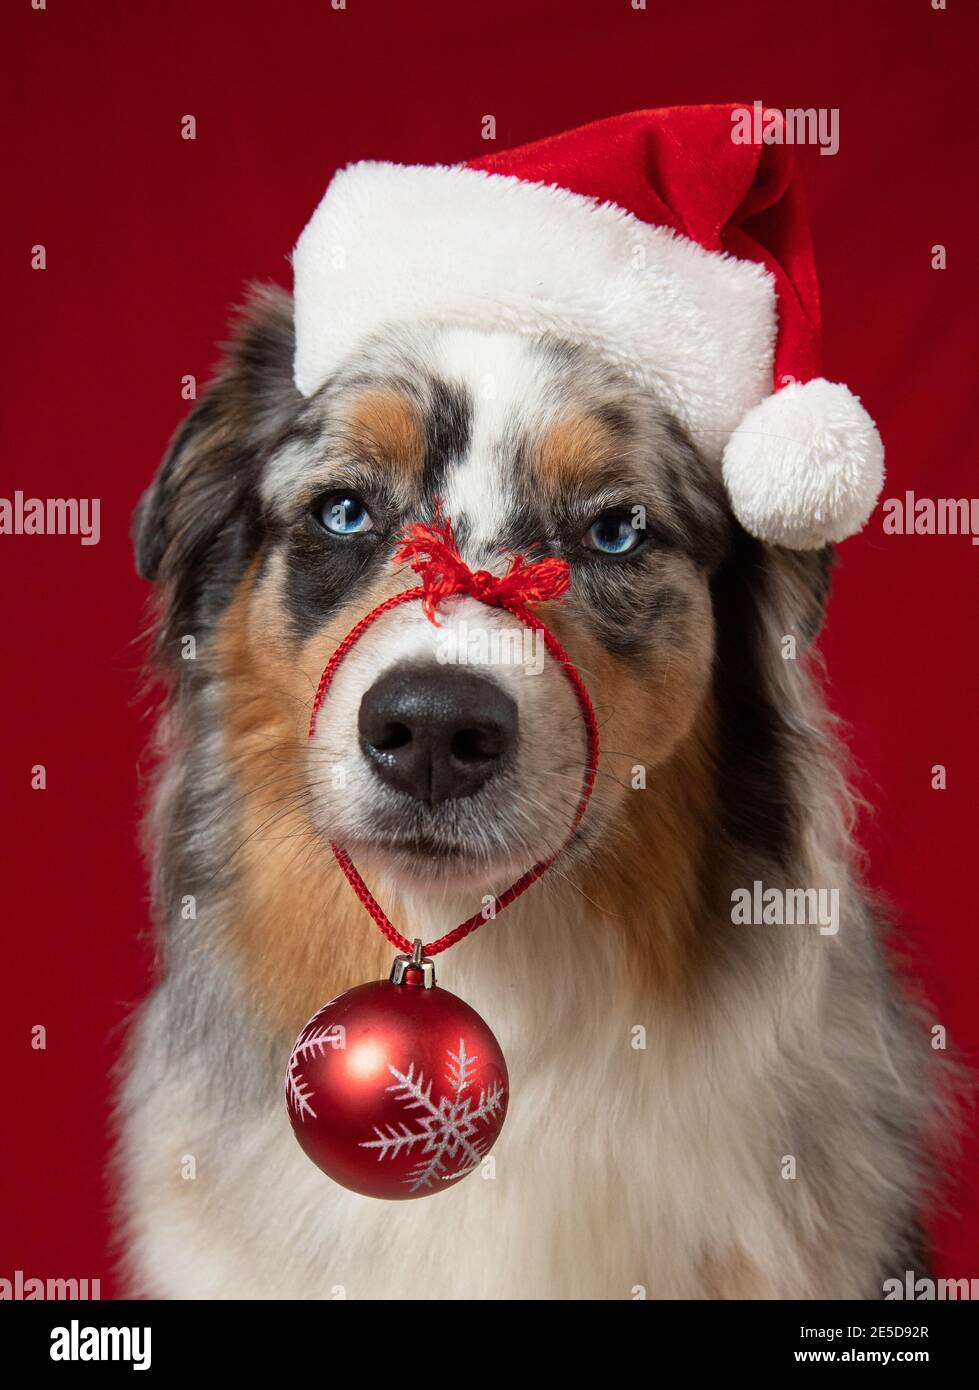 Portrait of an Australian Shepherd dog wearing a Santa hat and Christmas bauble Stock Photo